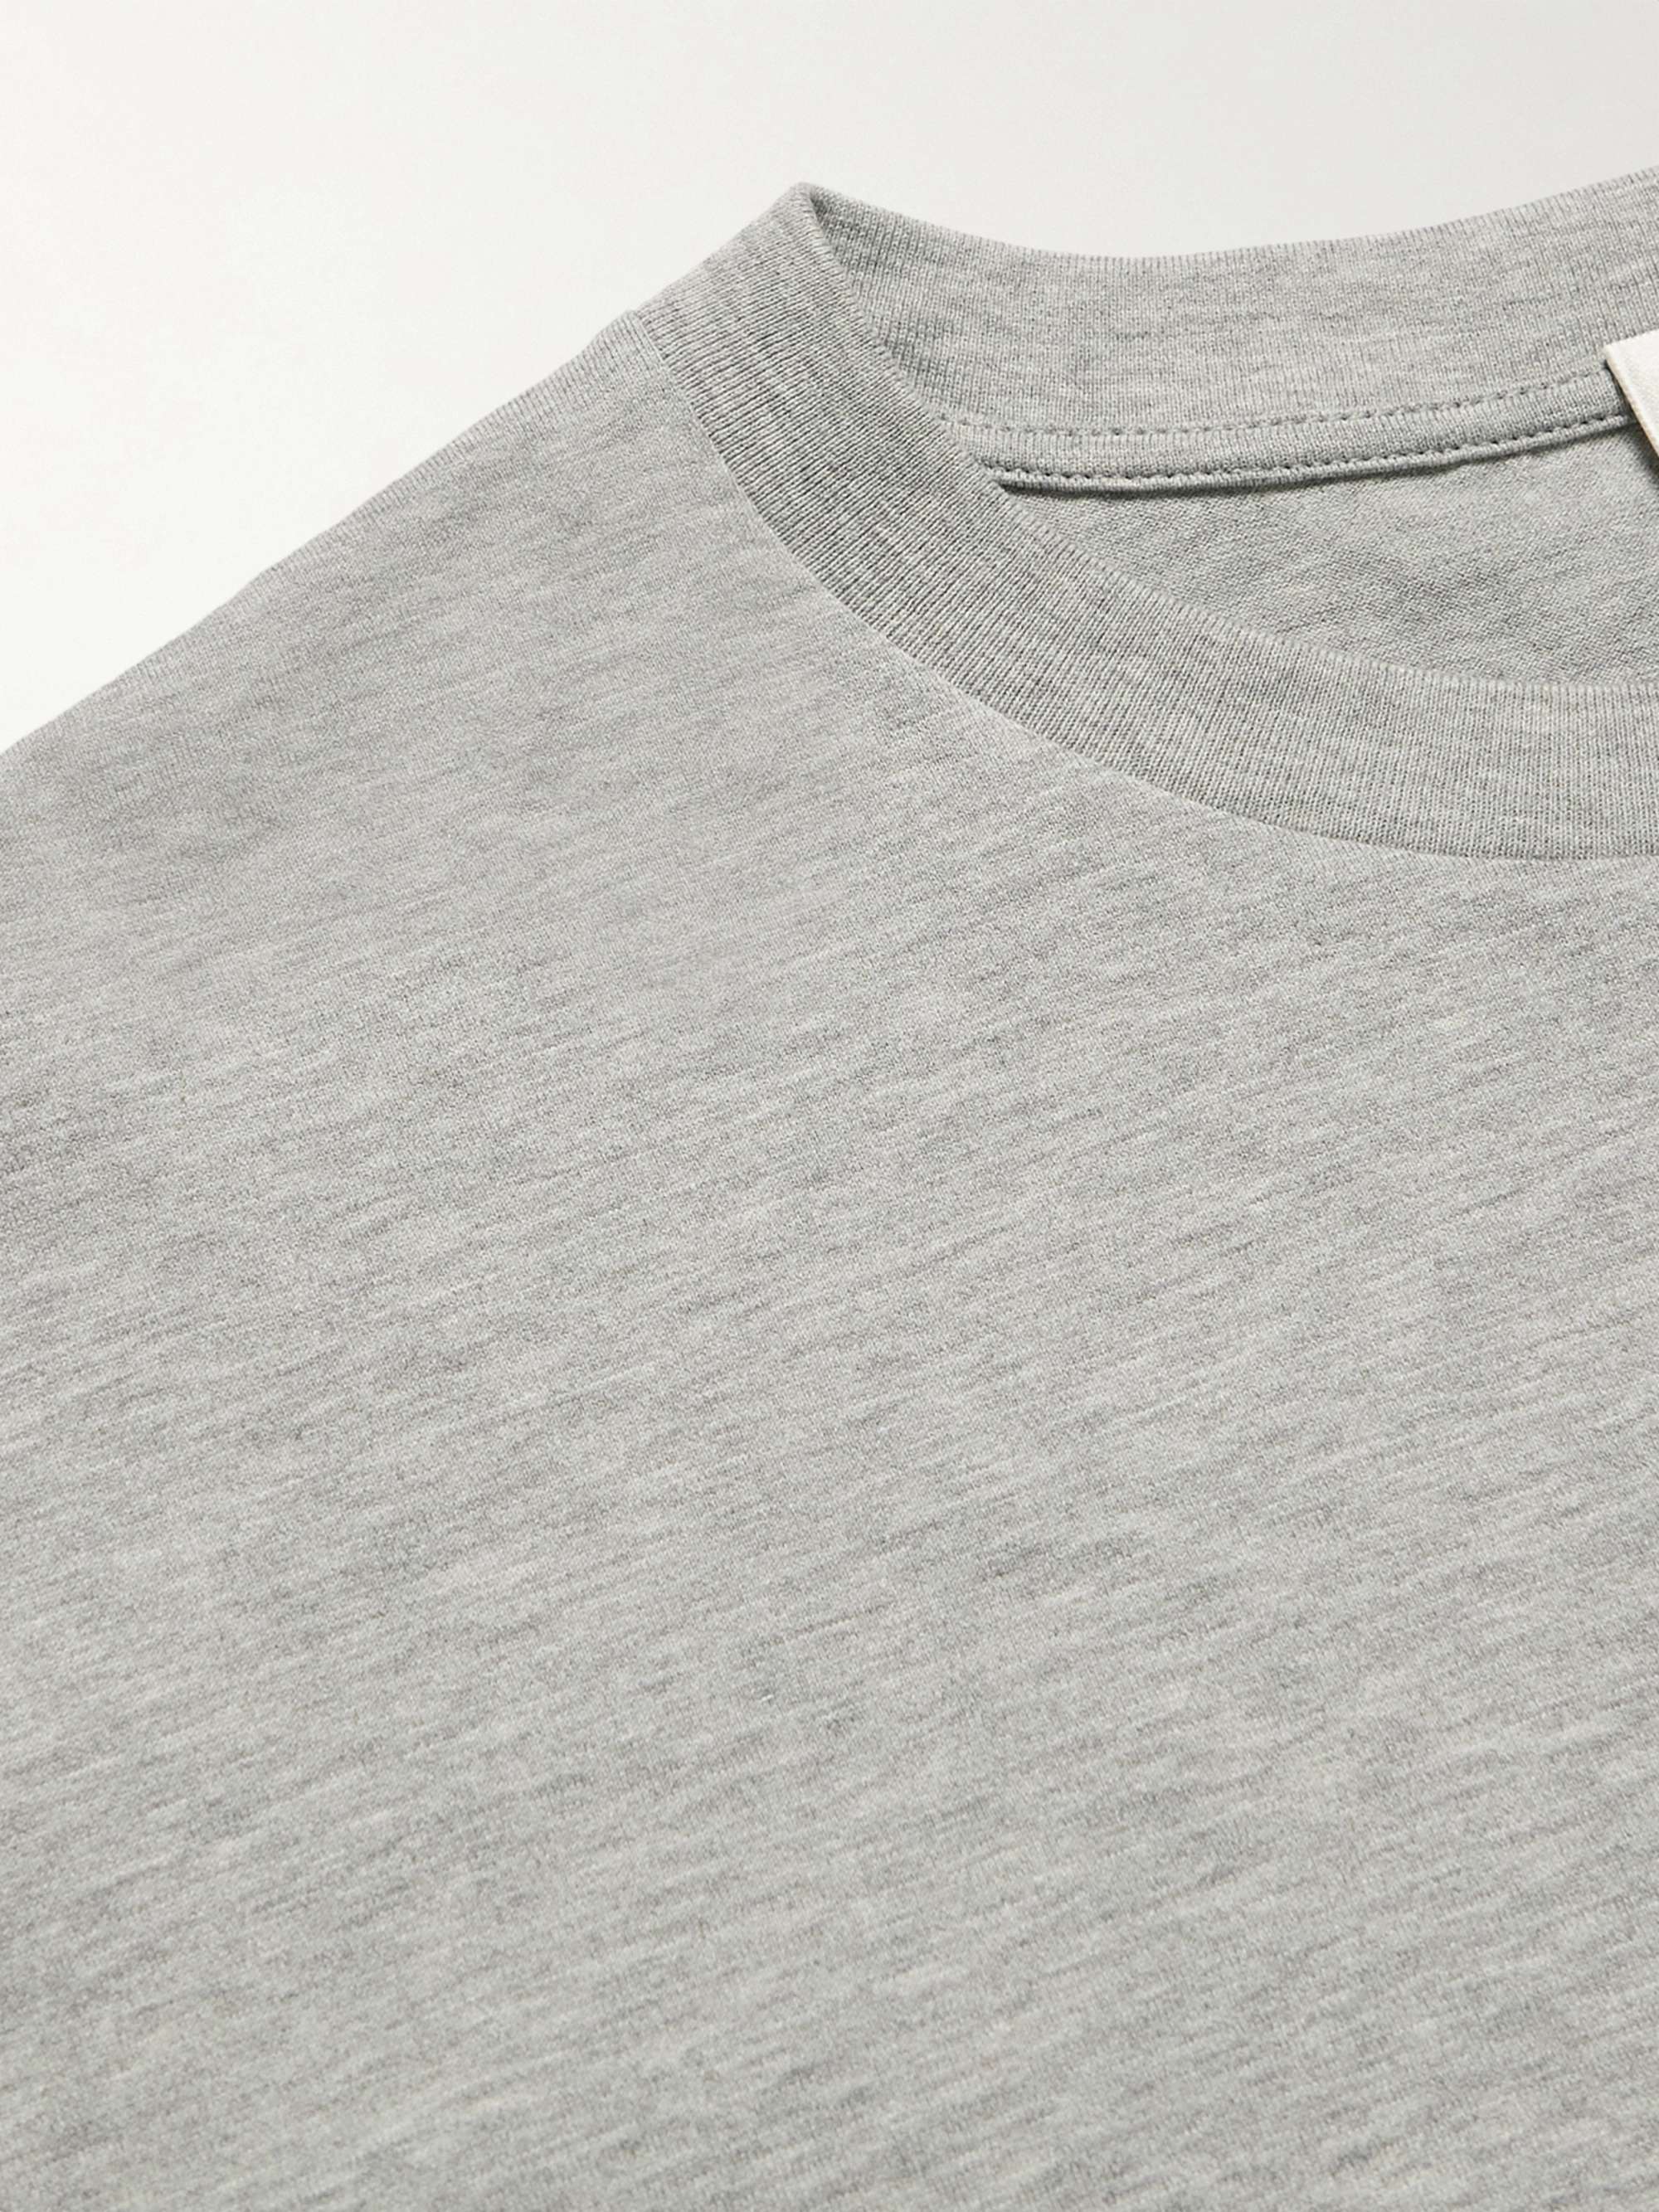 CELINE HOMME Oversized Logo-Print Cotton-Jersey T-Shirt